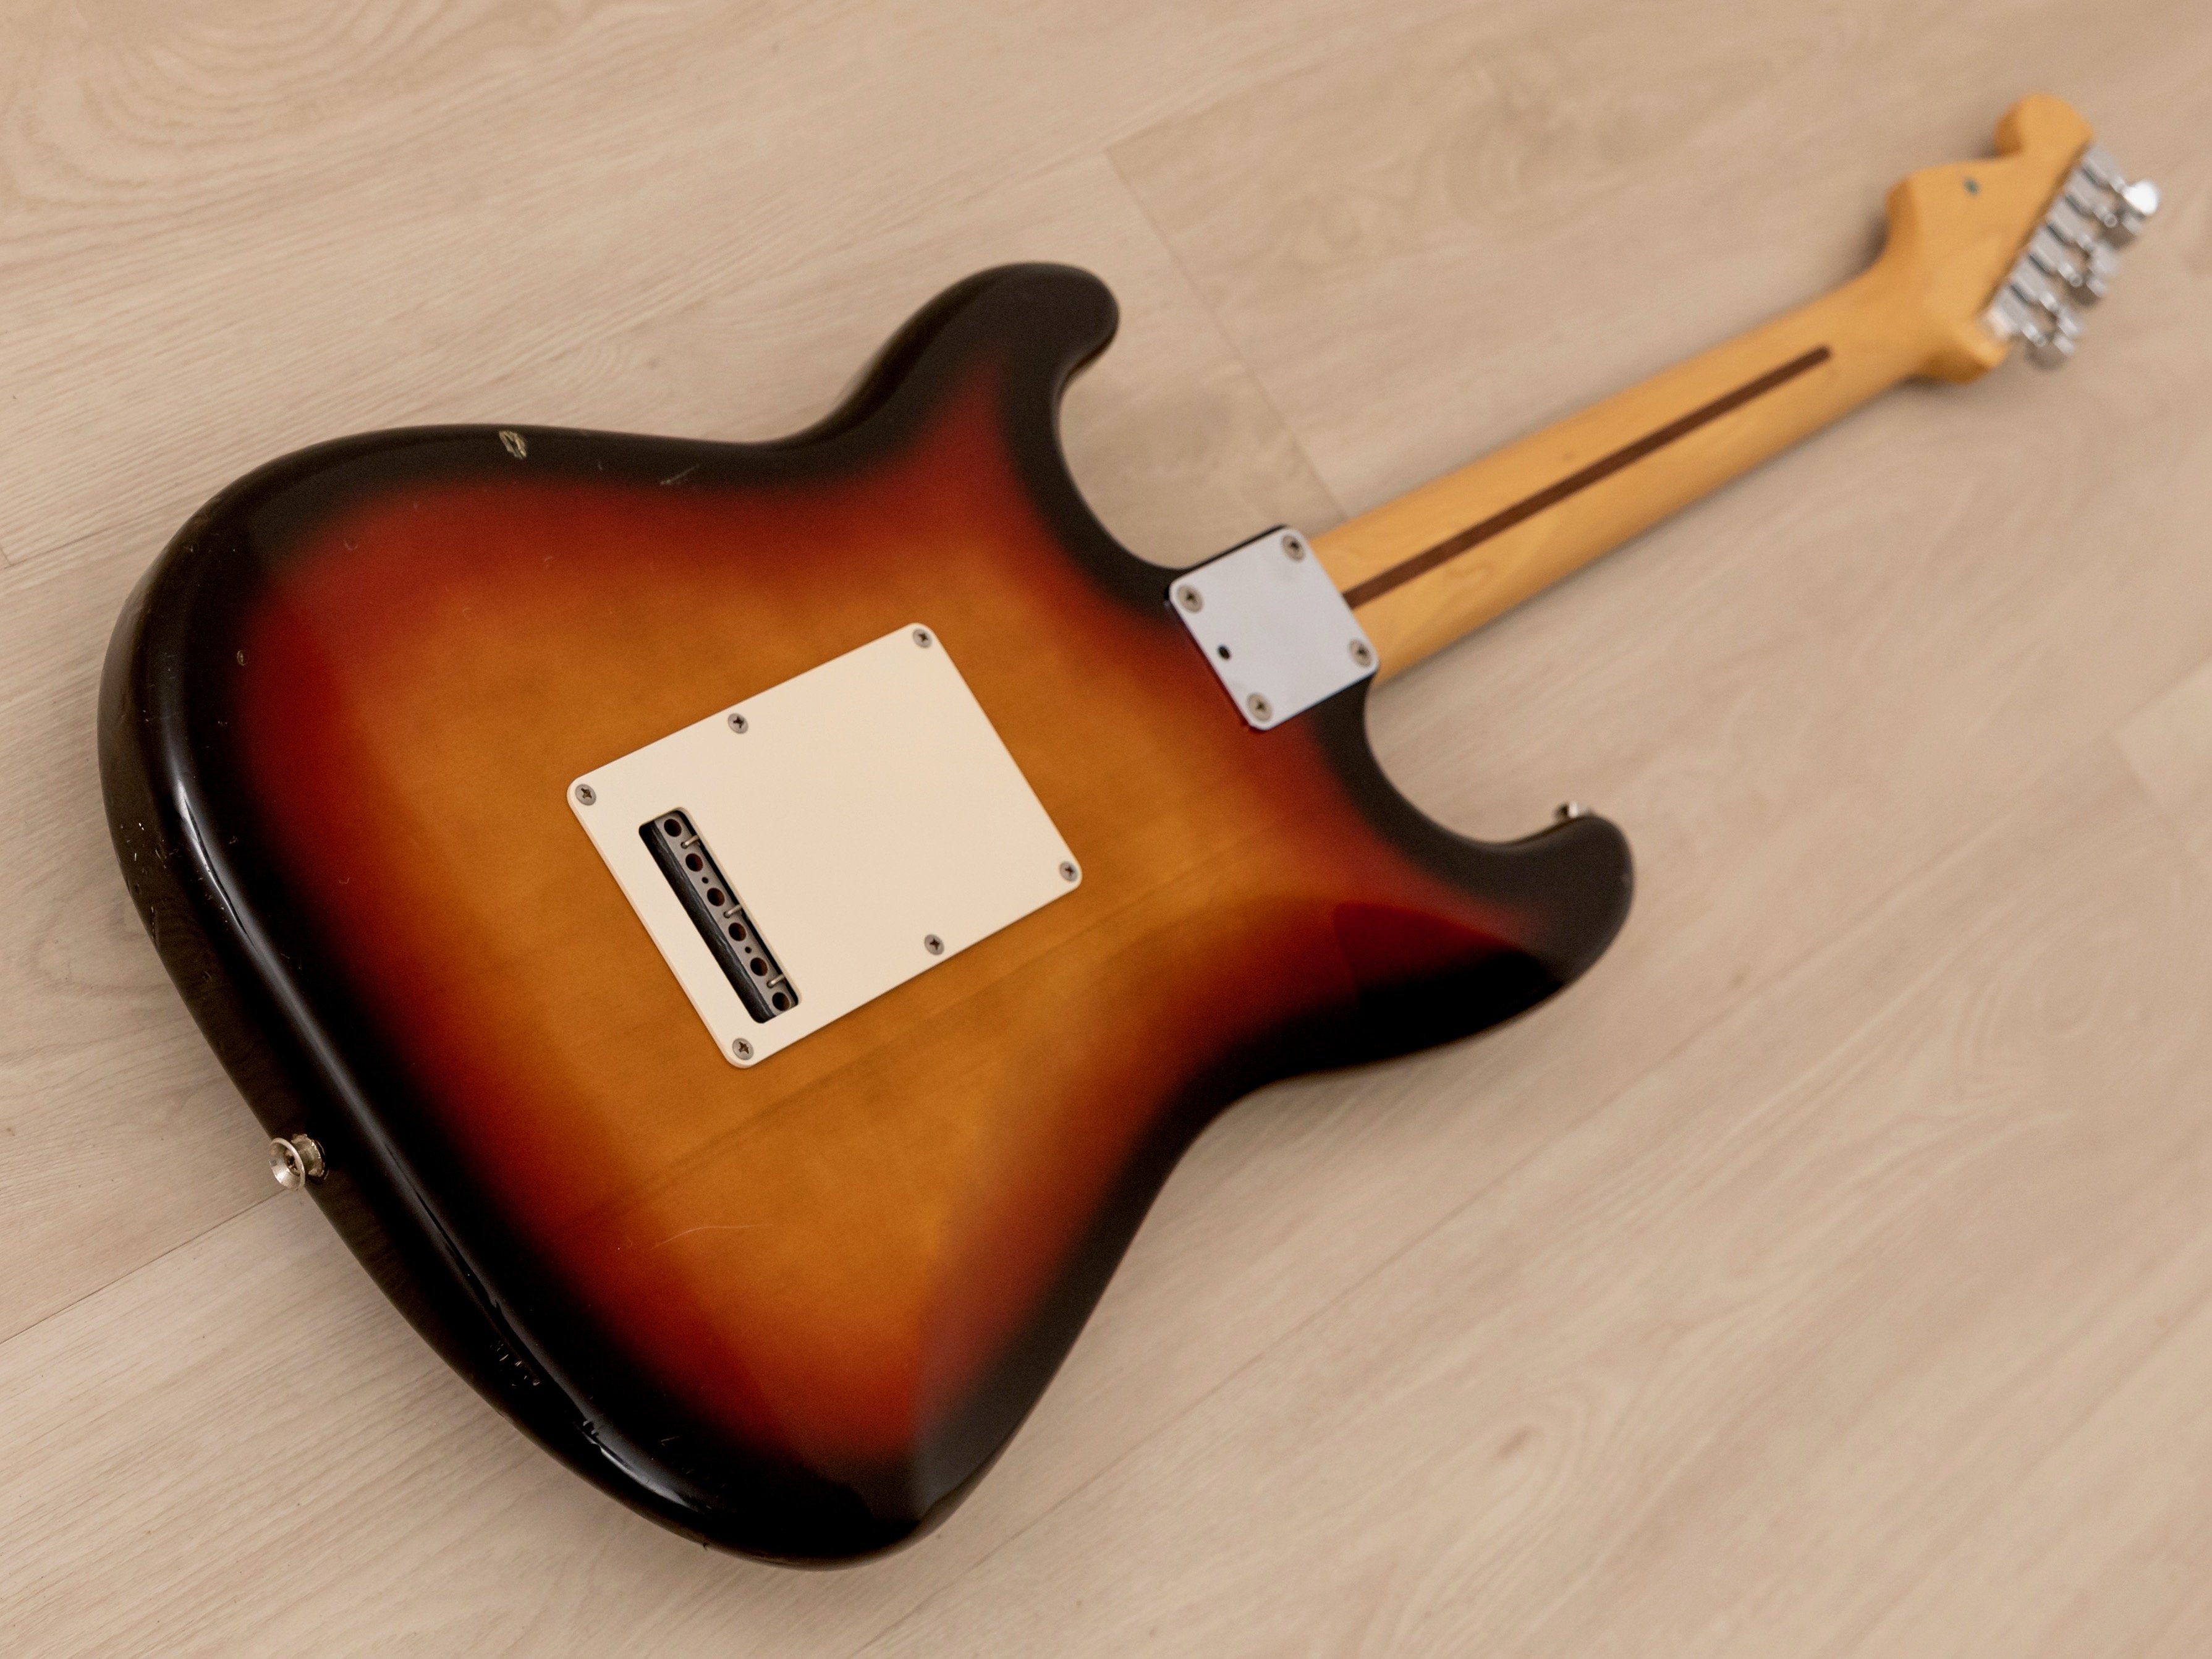 1989 Fender Japan Stratocaster, American Standard Template w/ Rosewood Board, Schaller Hardware, MIJ Fujigen